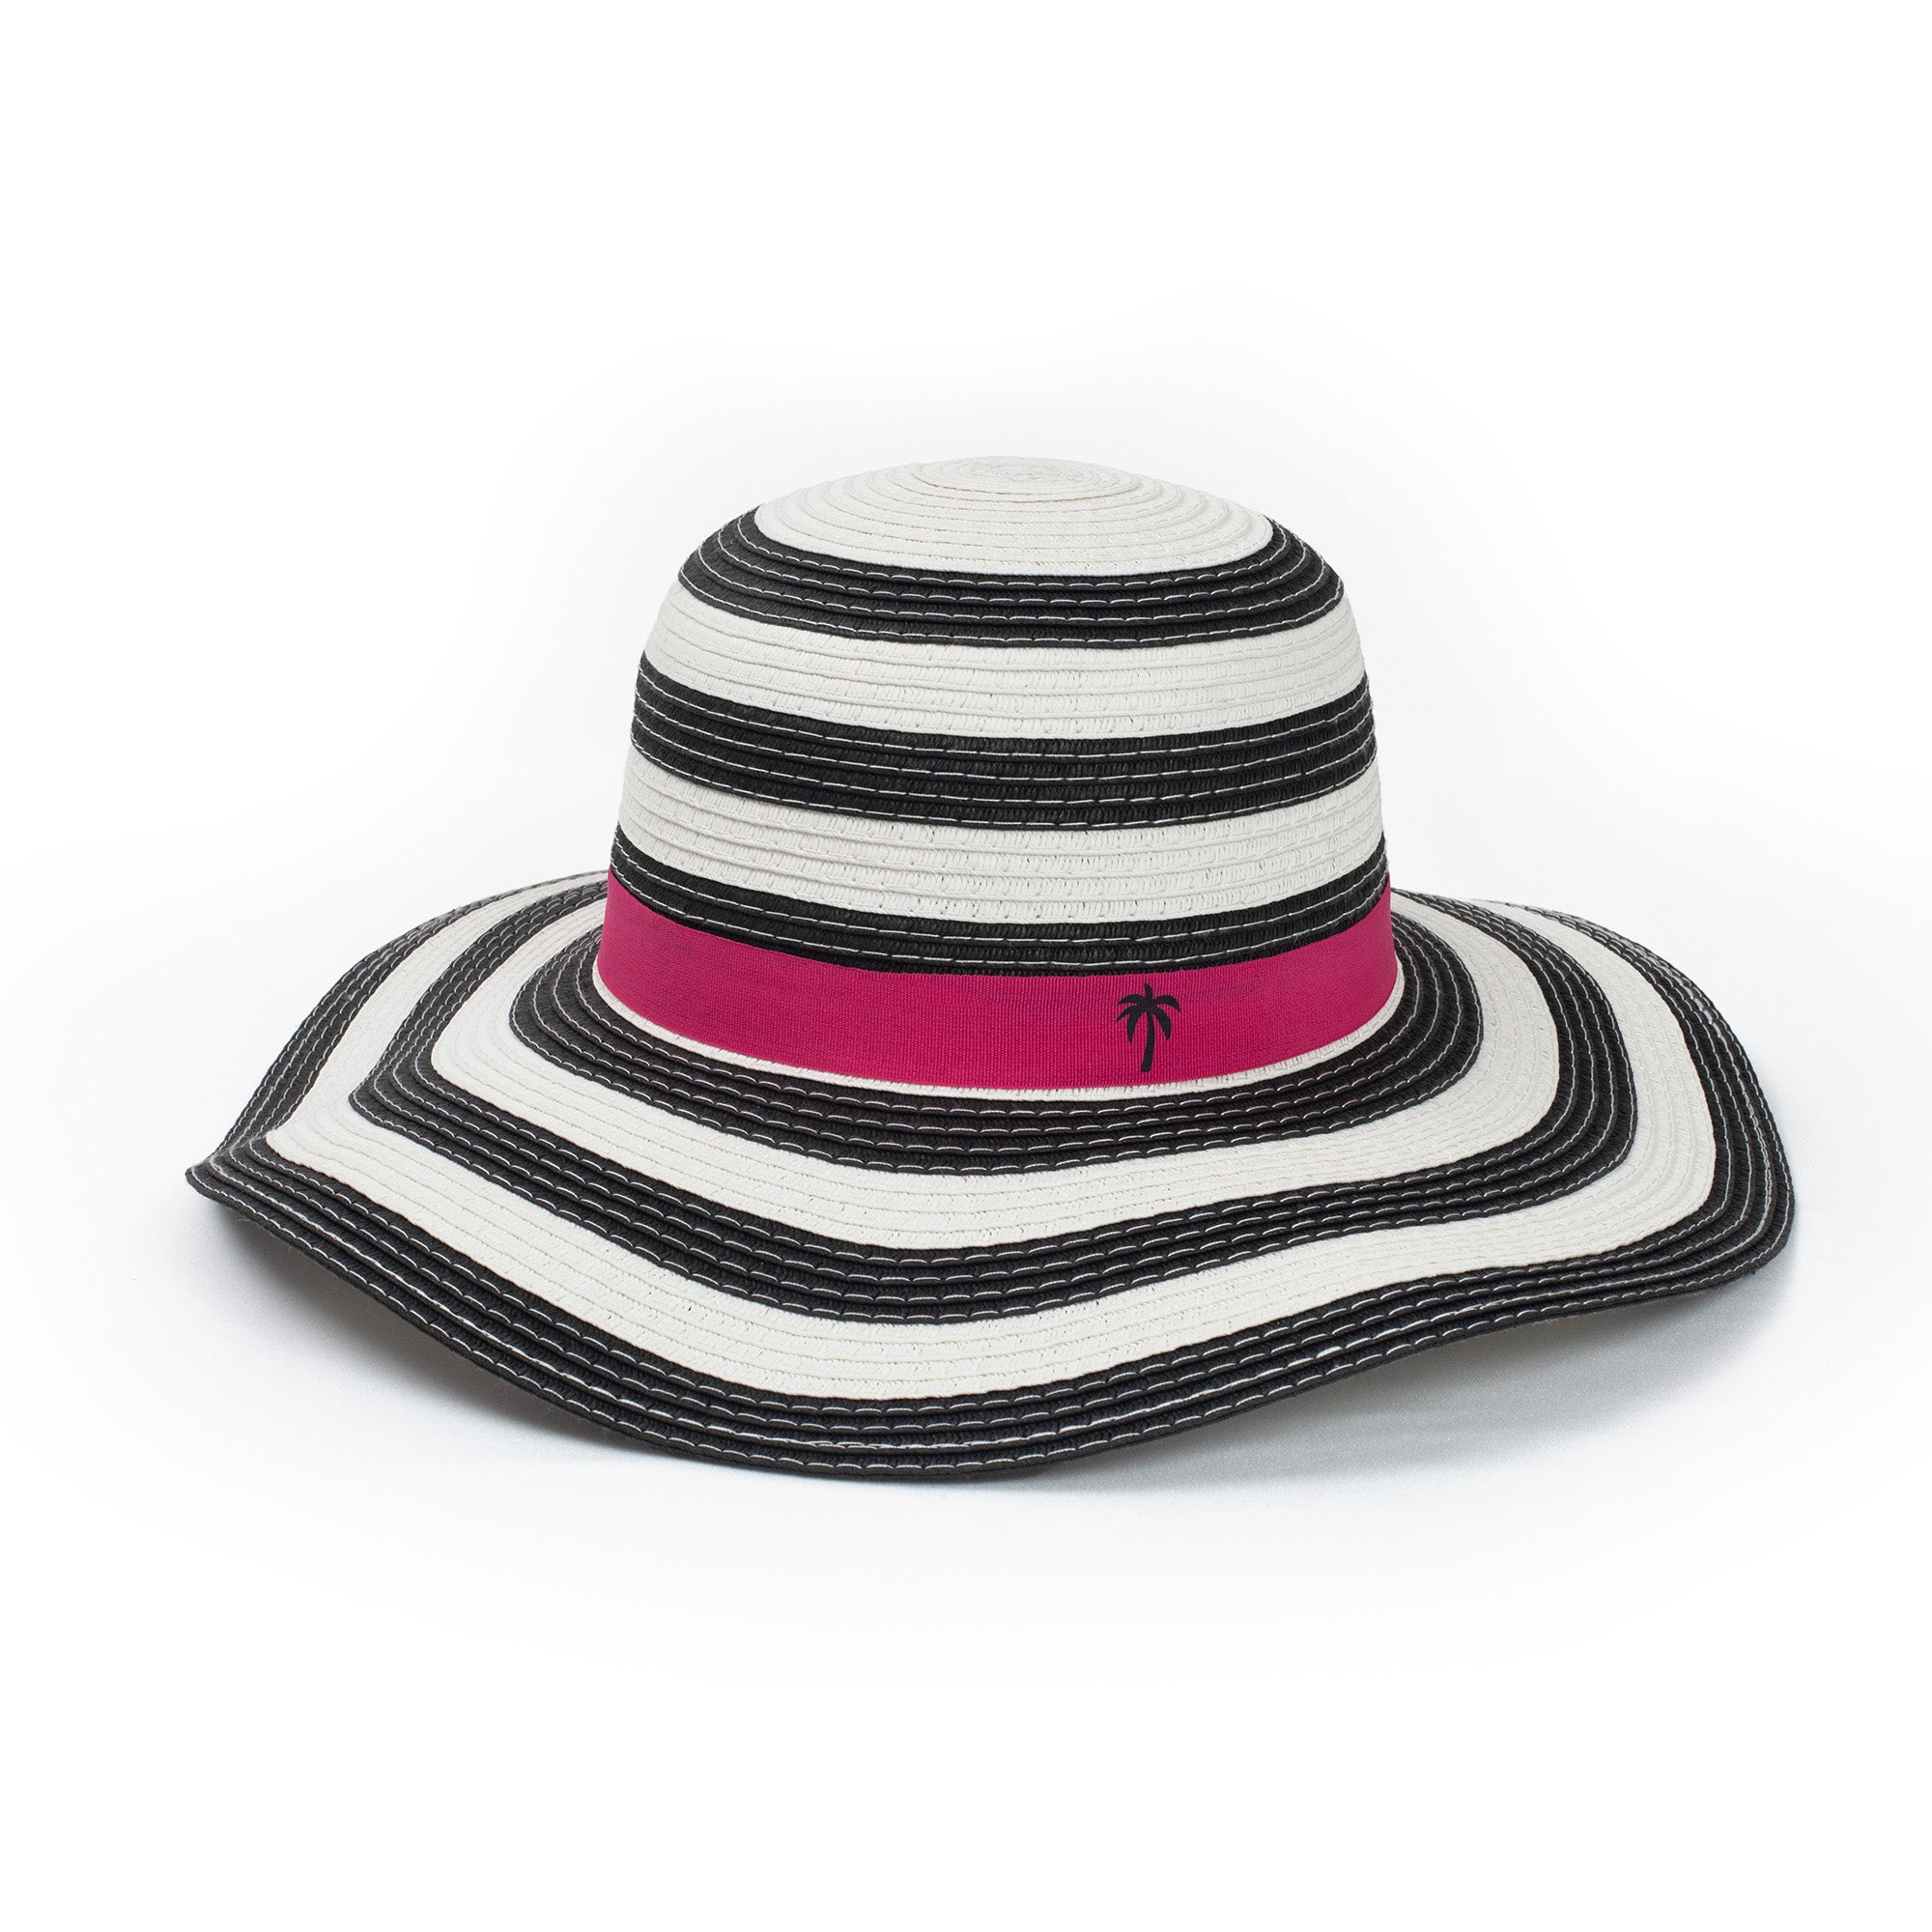 Women’s Hats, Women’s Sun Hats, Comfortable, Shady Beach, Summer, Palm Tree, Beach Days